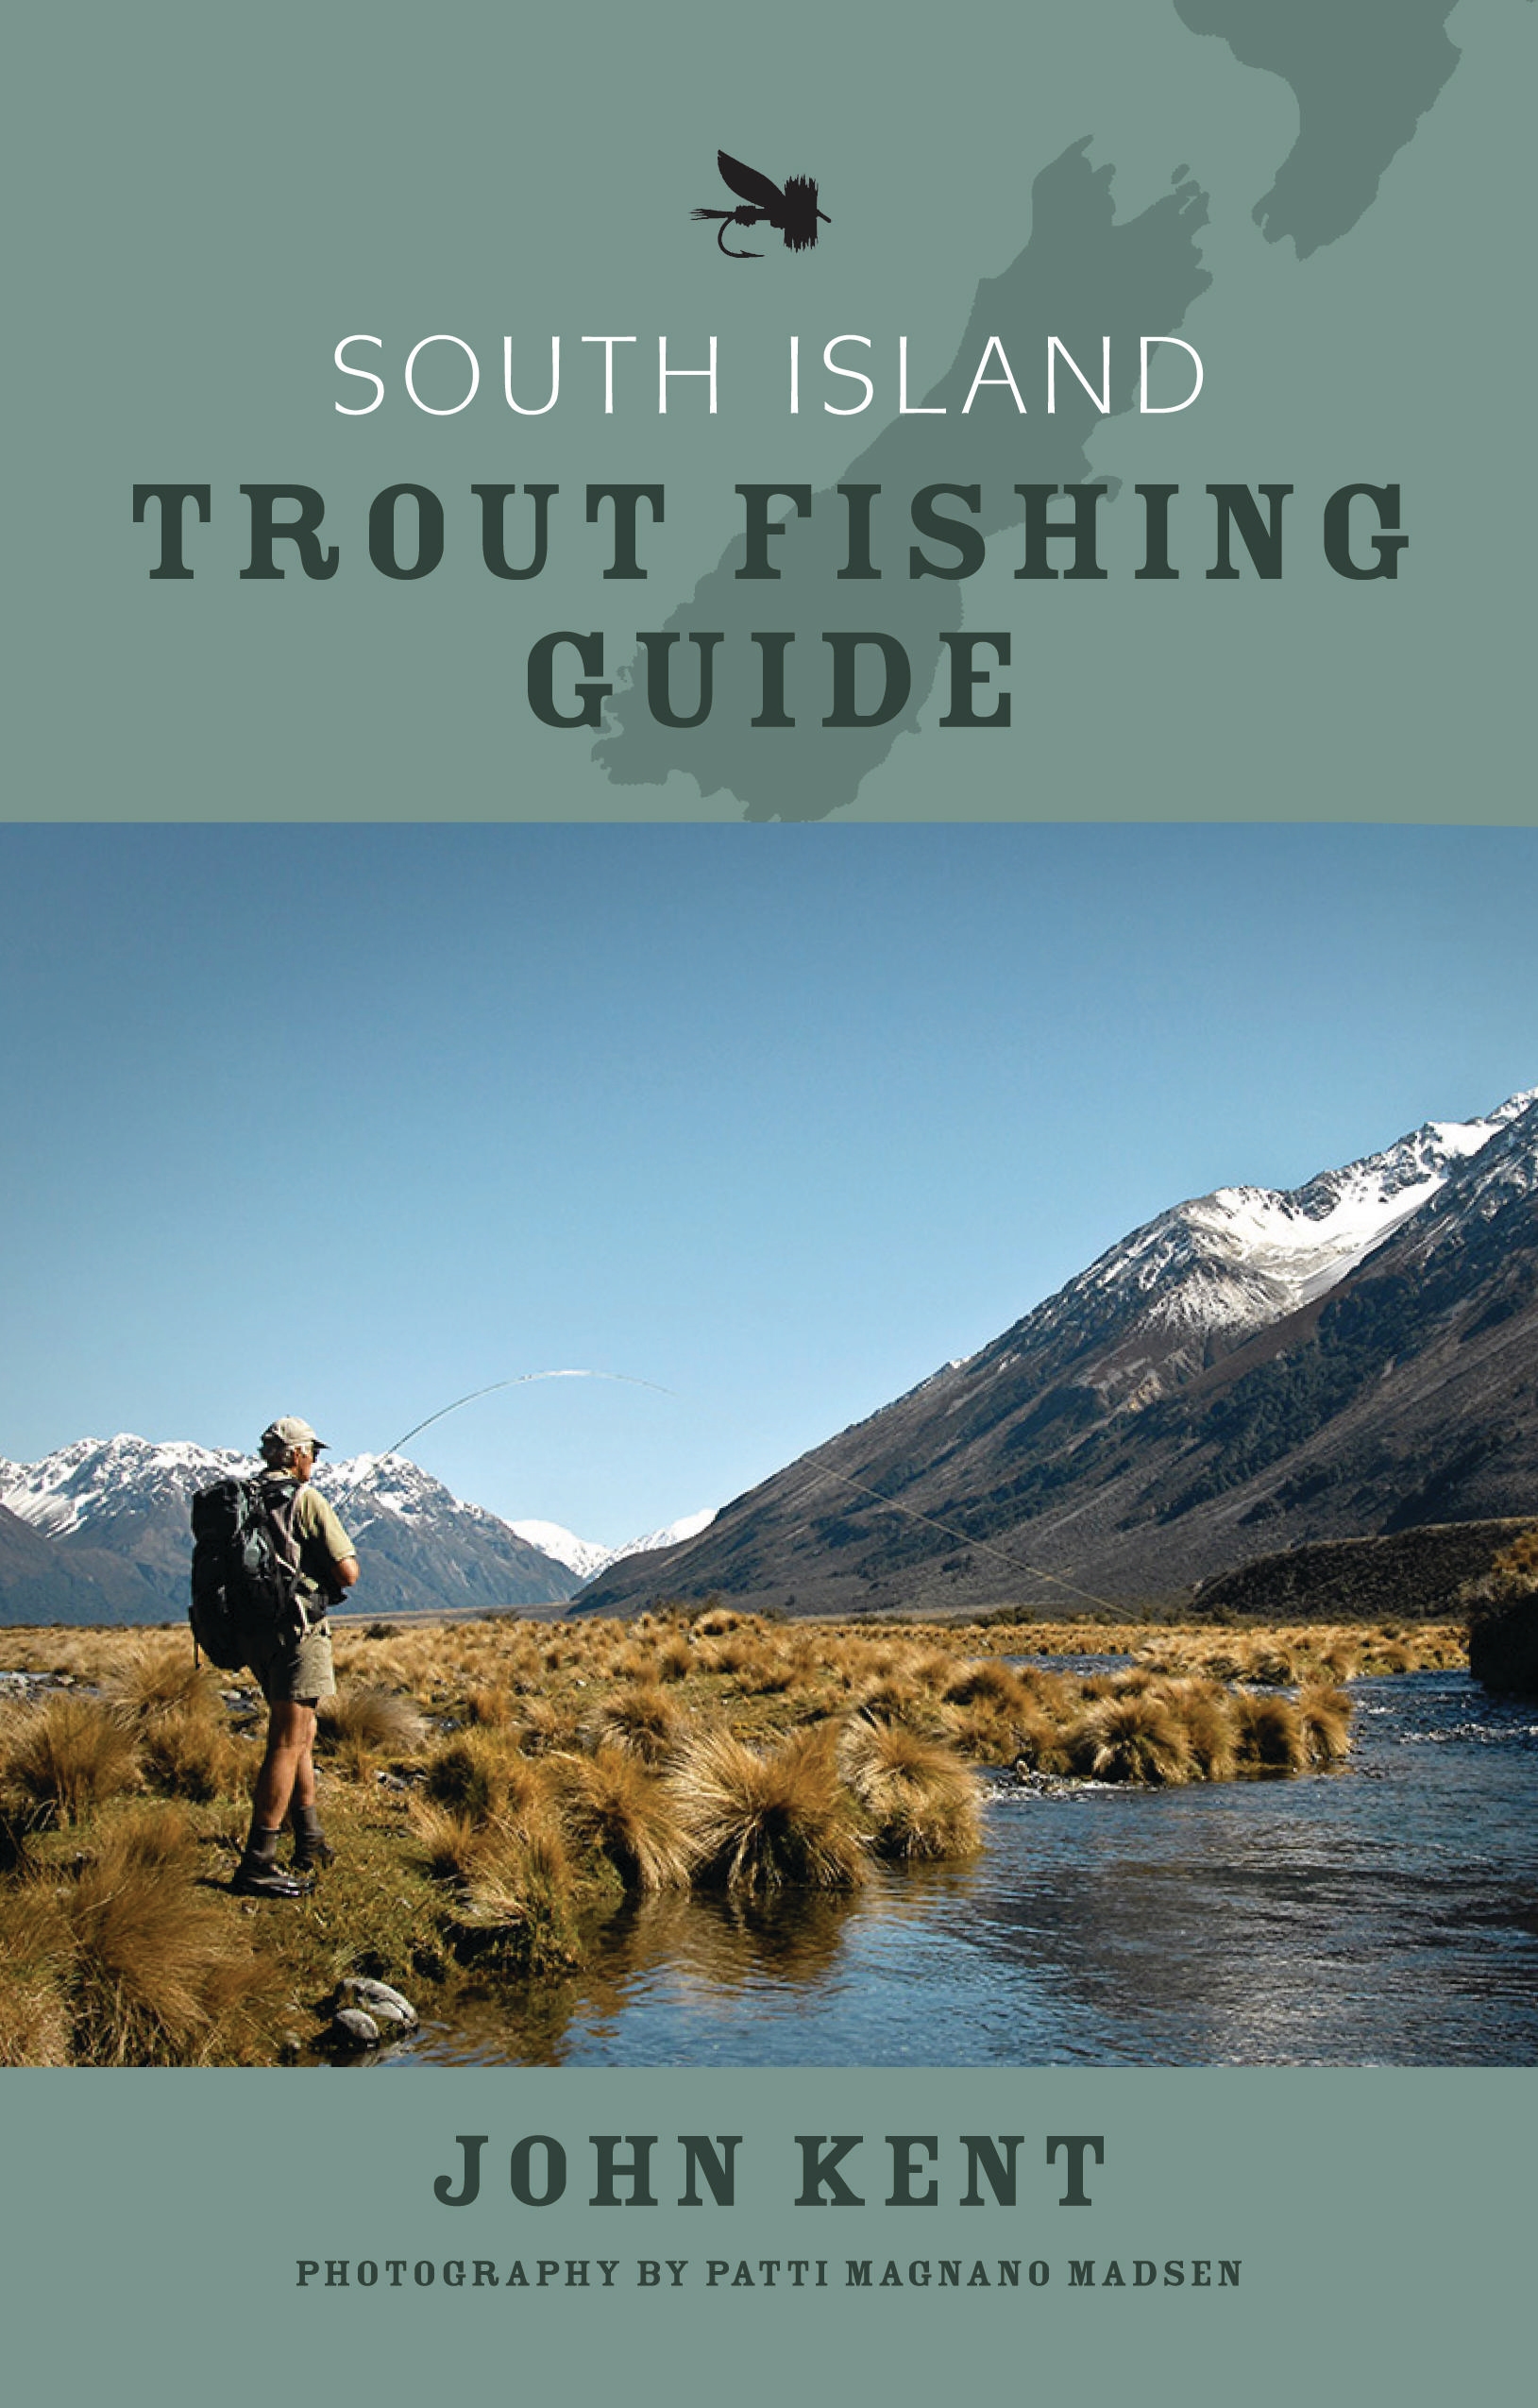 South Island Trout Fishing Guide by John Kent - Penguin Books Australia